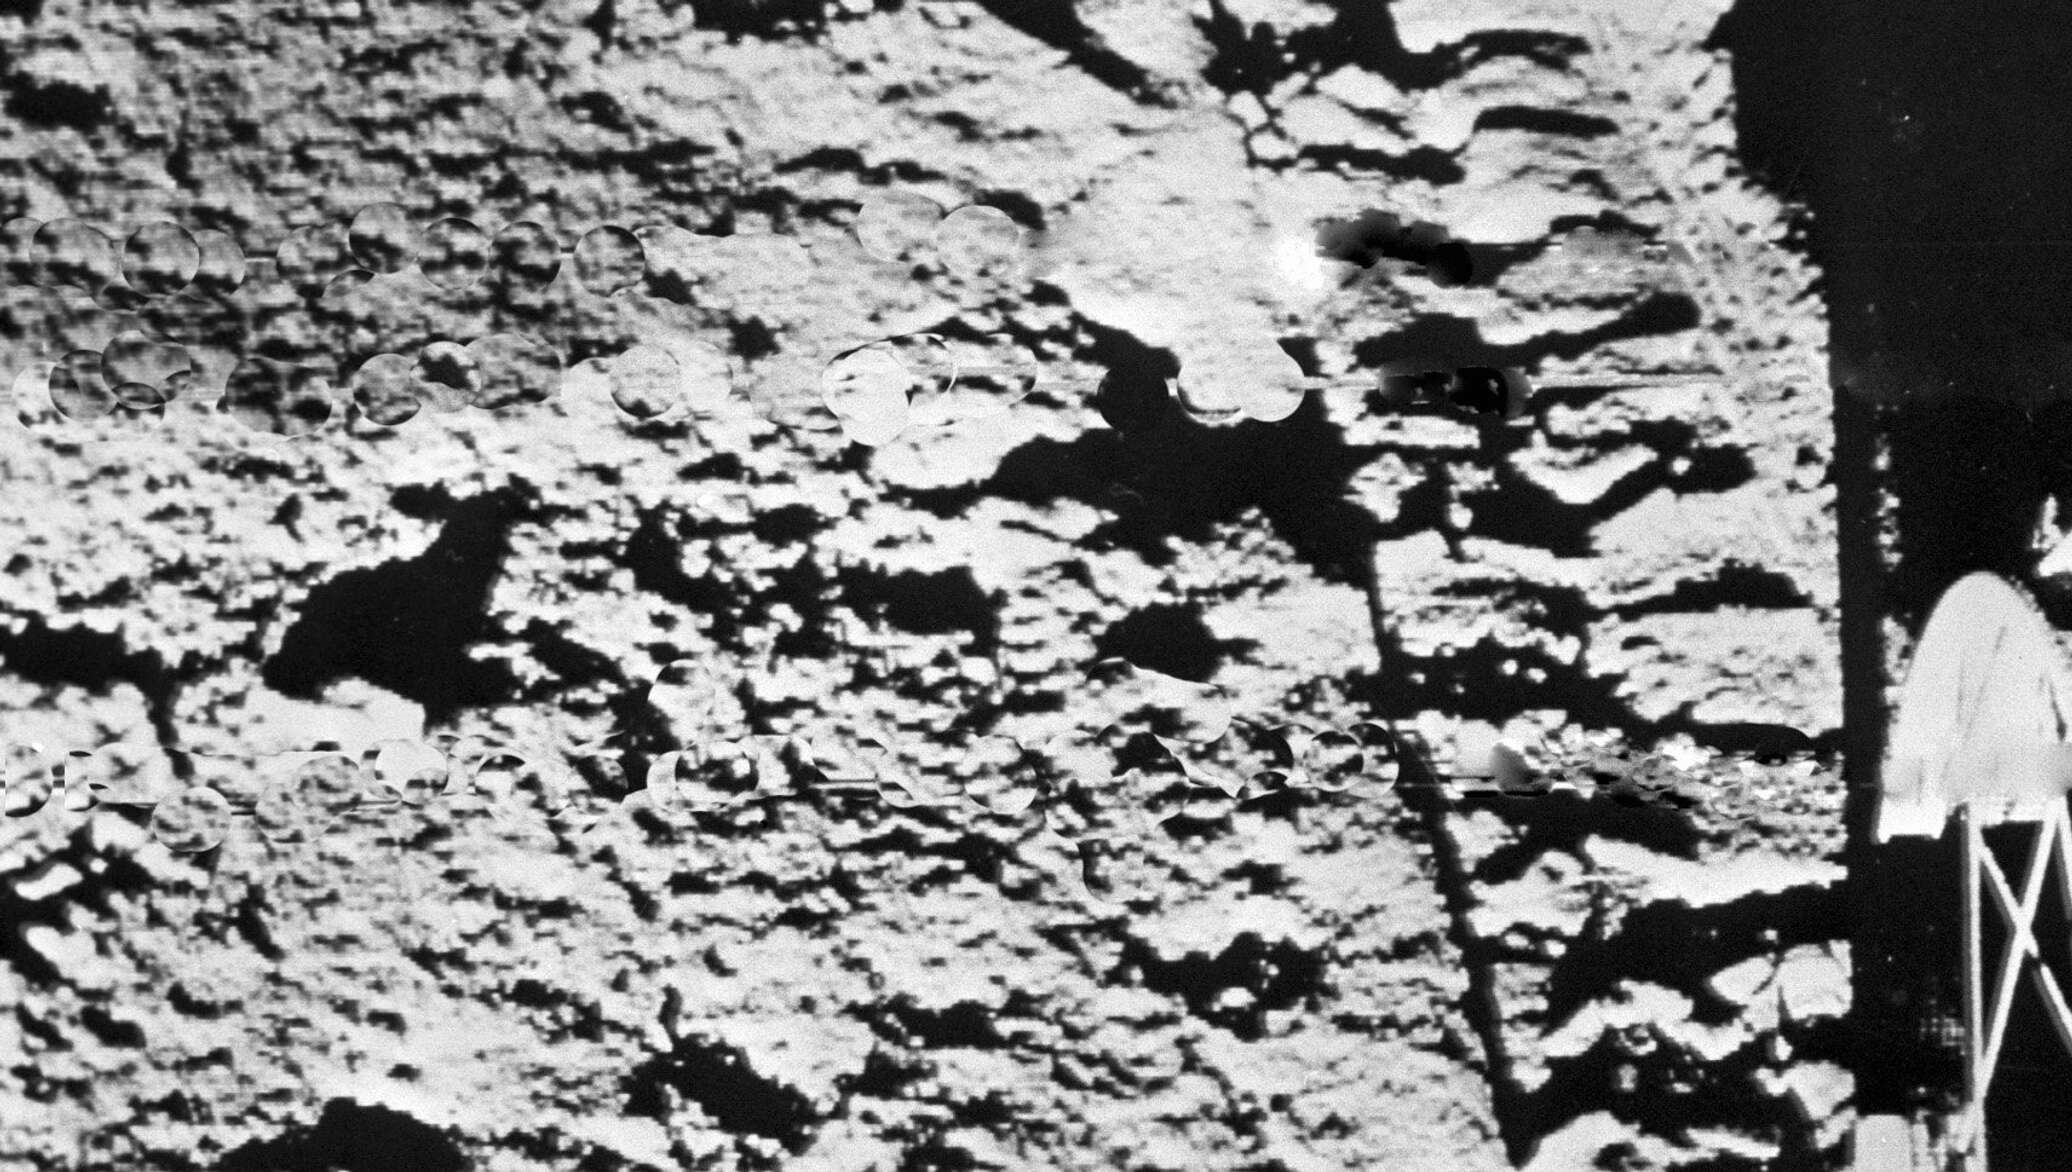 Следы луны 14 вк. Аполлон 17 НЛО. UFO Moon. Apollo 17 photo. Black Knight Satellite Art.